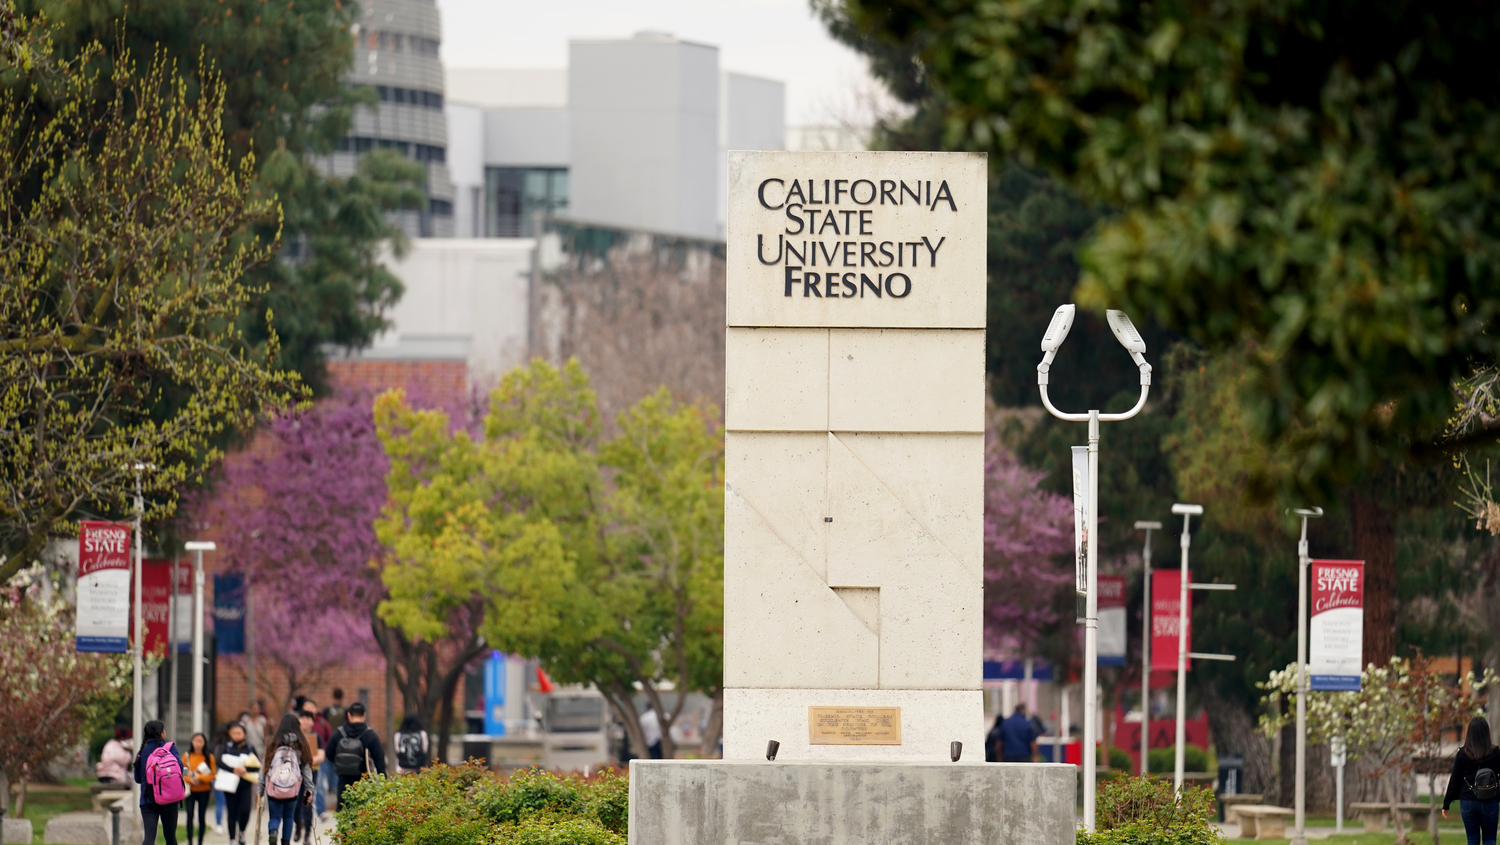 California State University Fresno sign